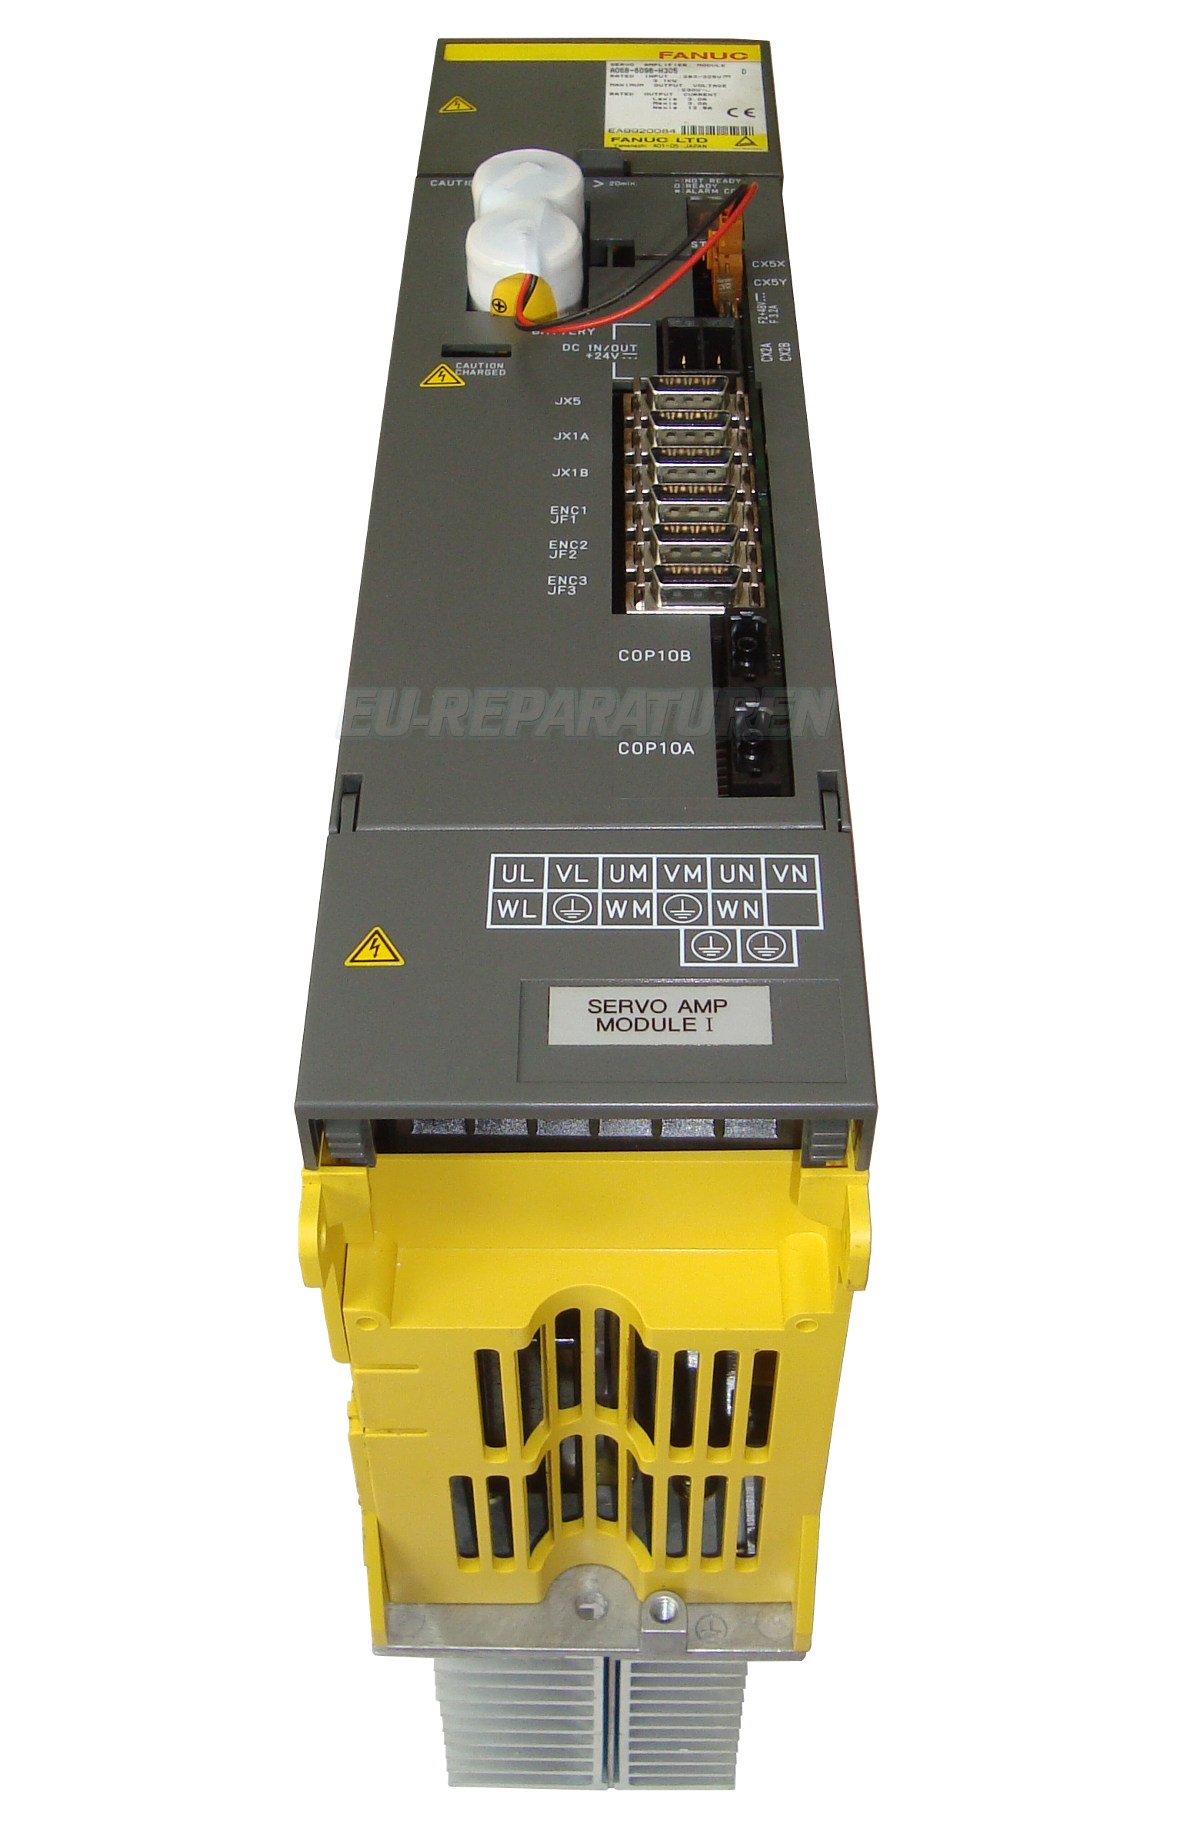 2 Repair A06b-6096-h305 Servo Amplifier Warranty